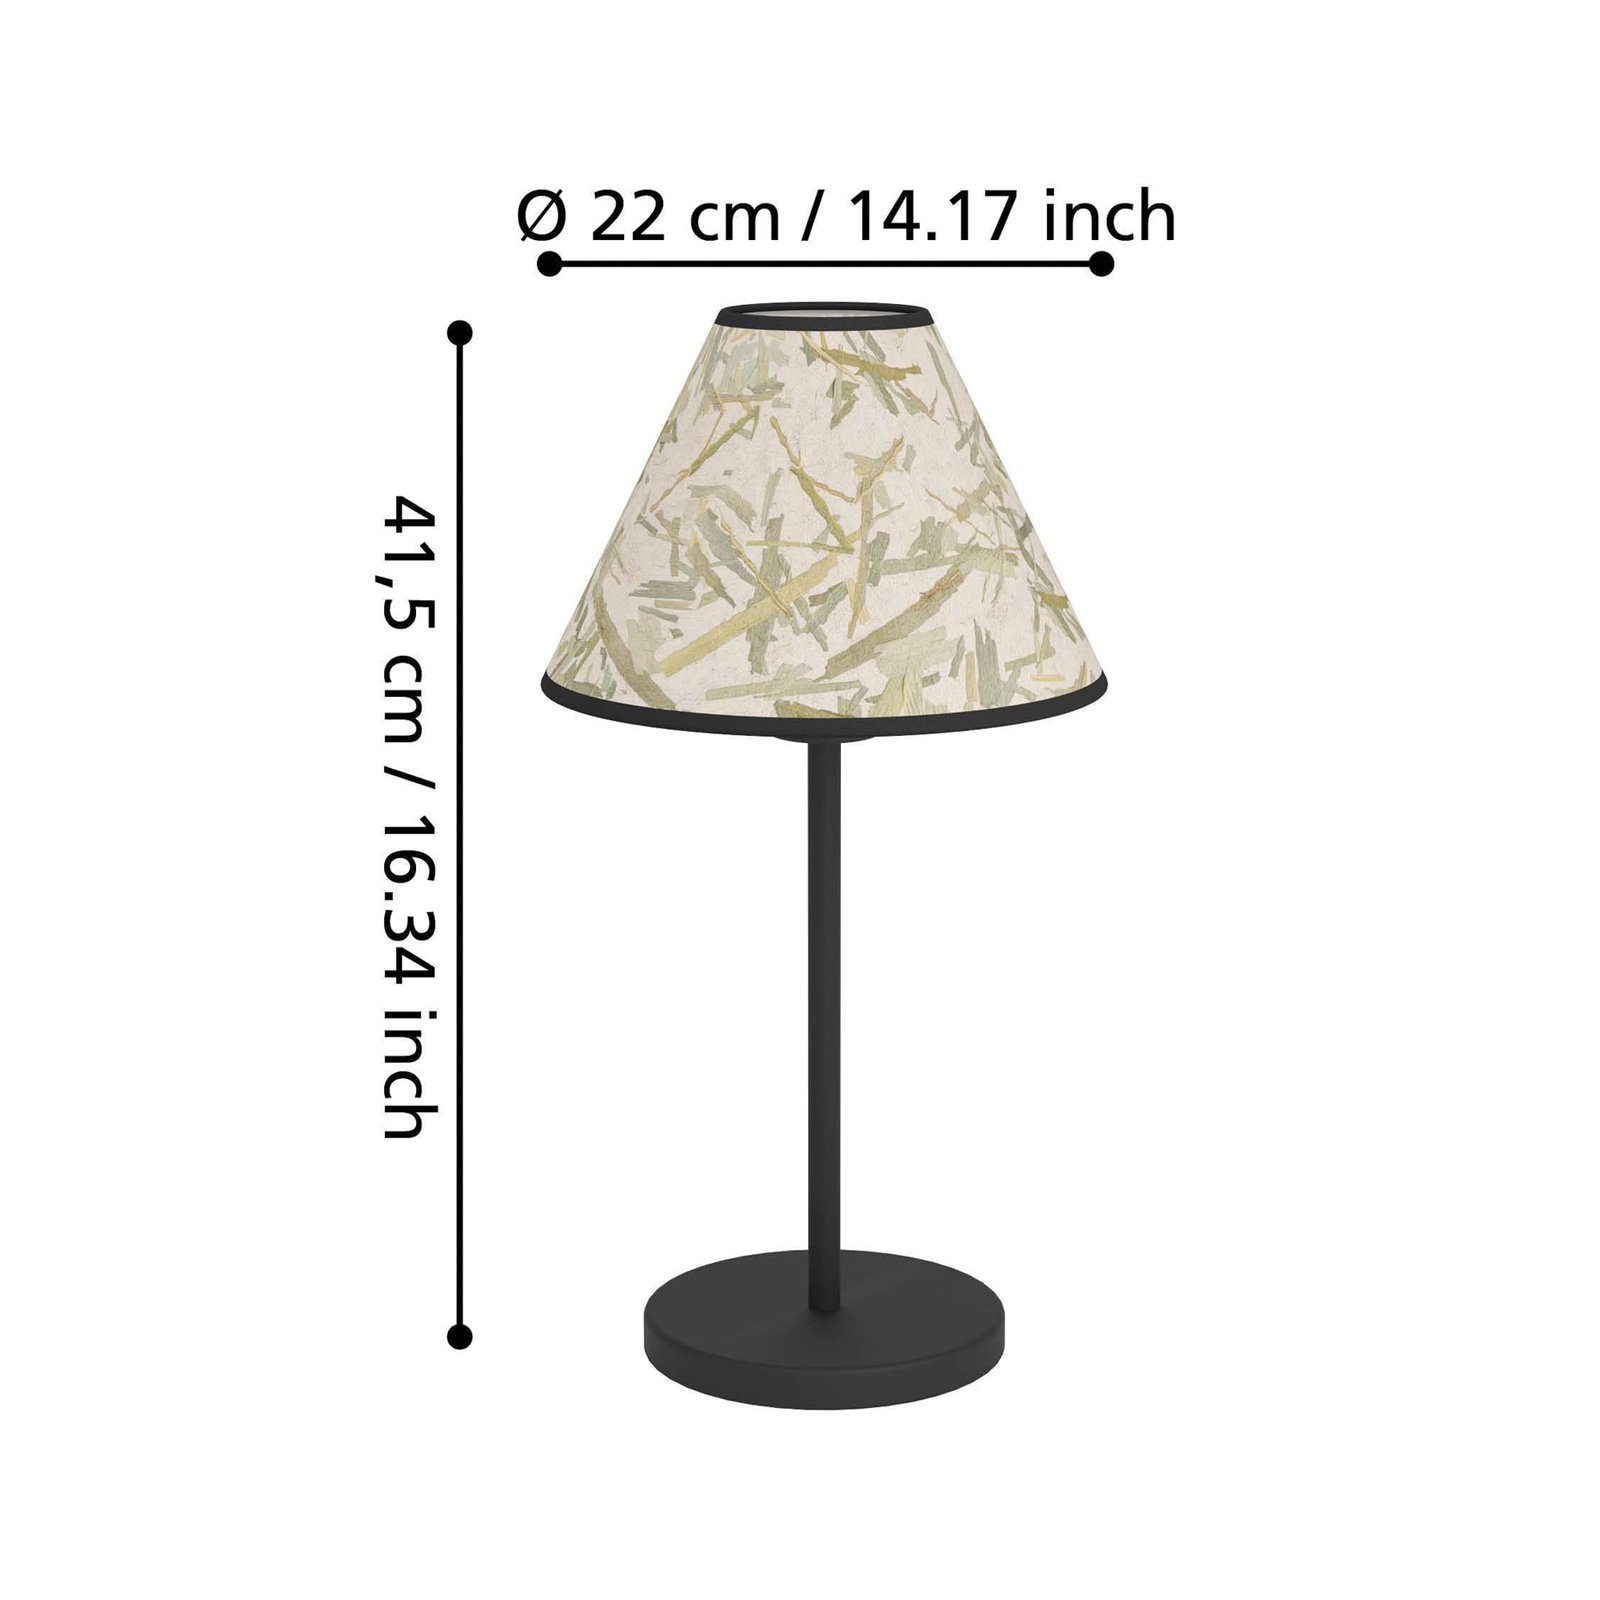 Oxpark tafellamp, hoogte 41,5 cm, groen/wit/zwart